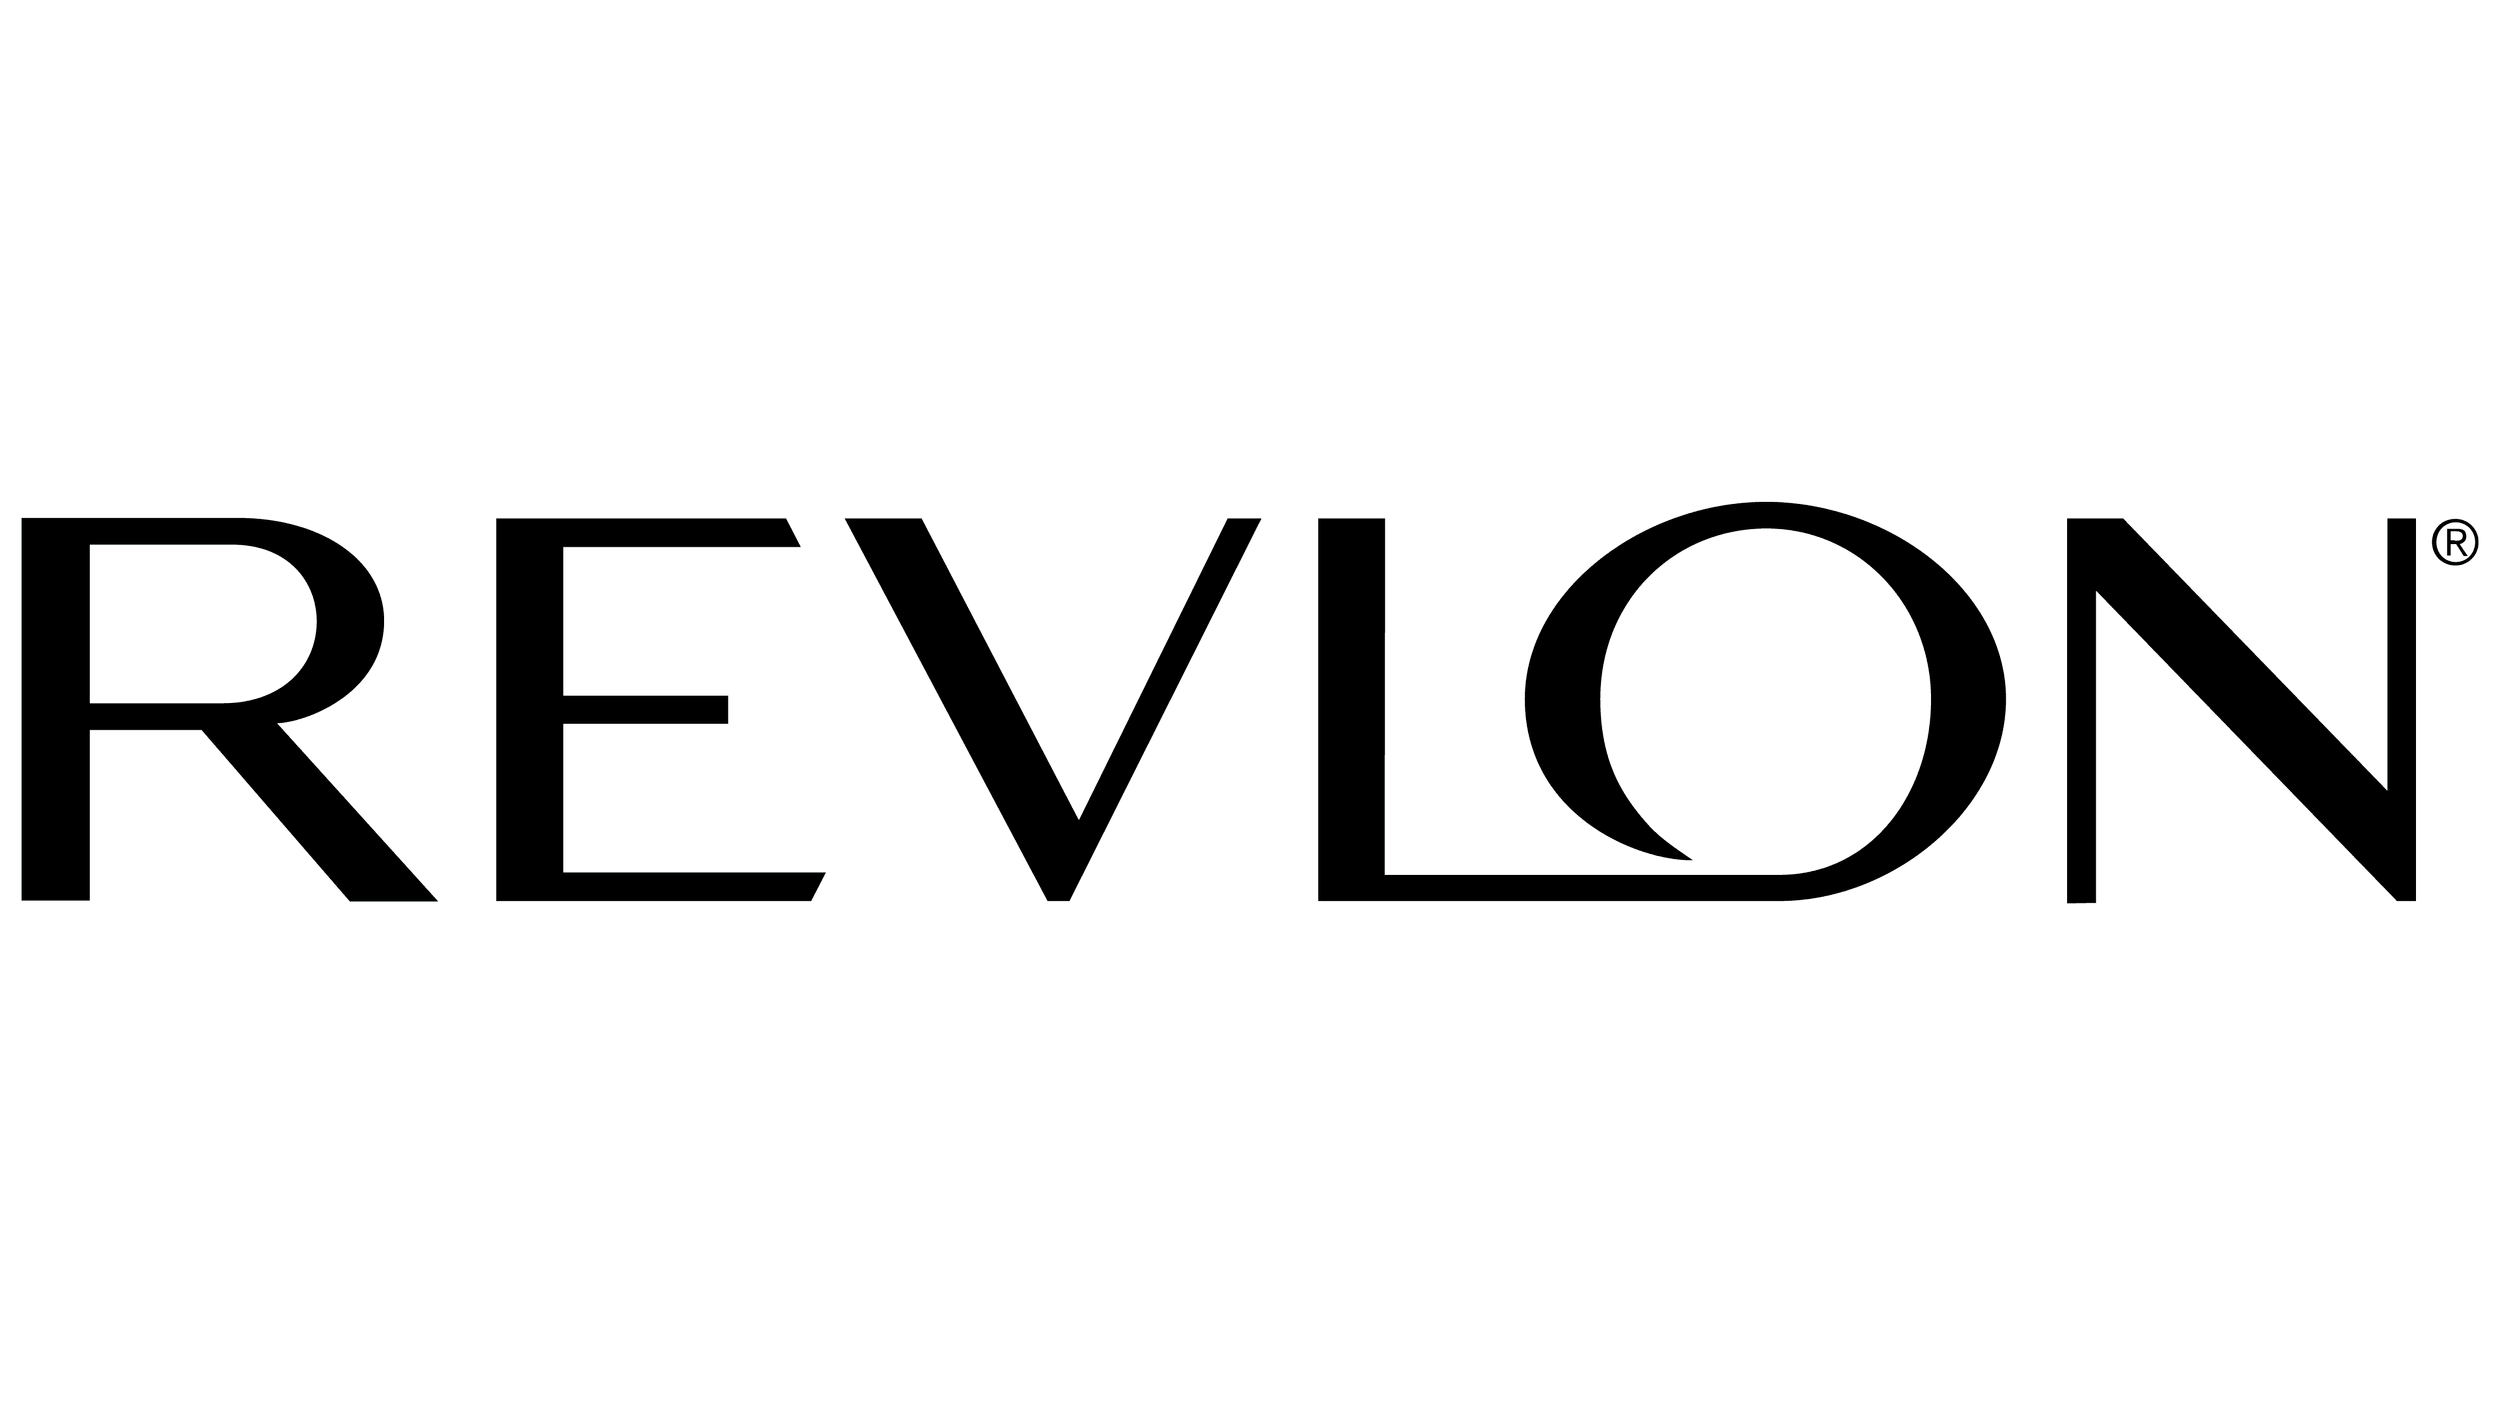 Revlon-logo.png